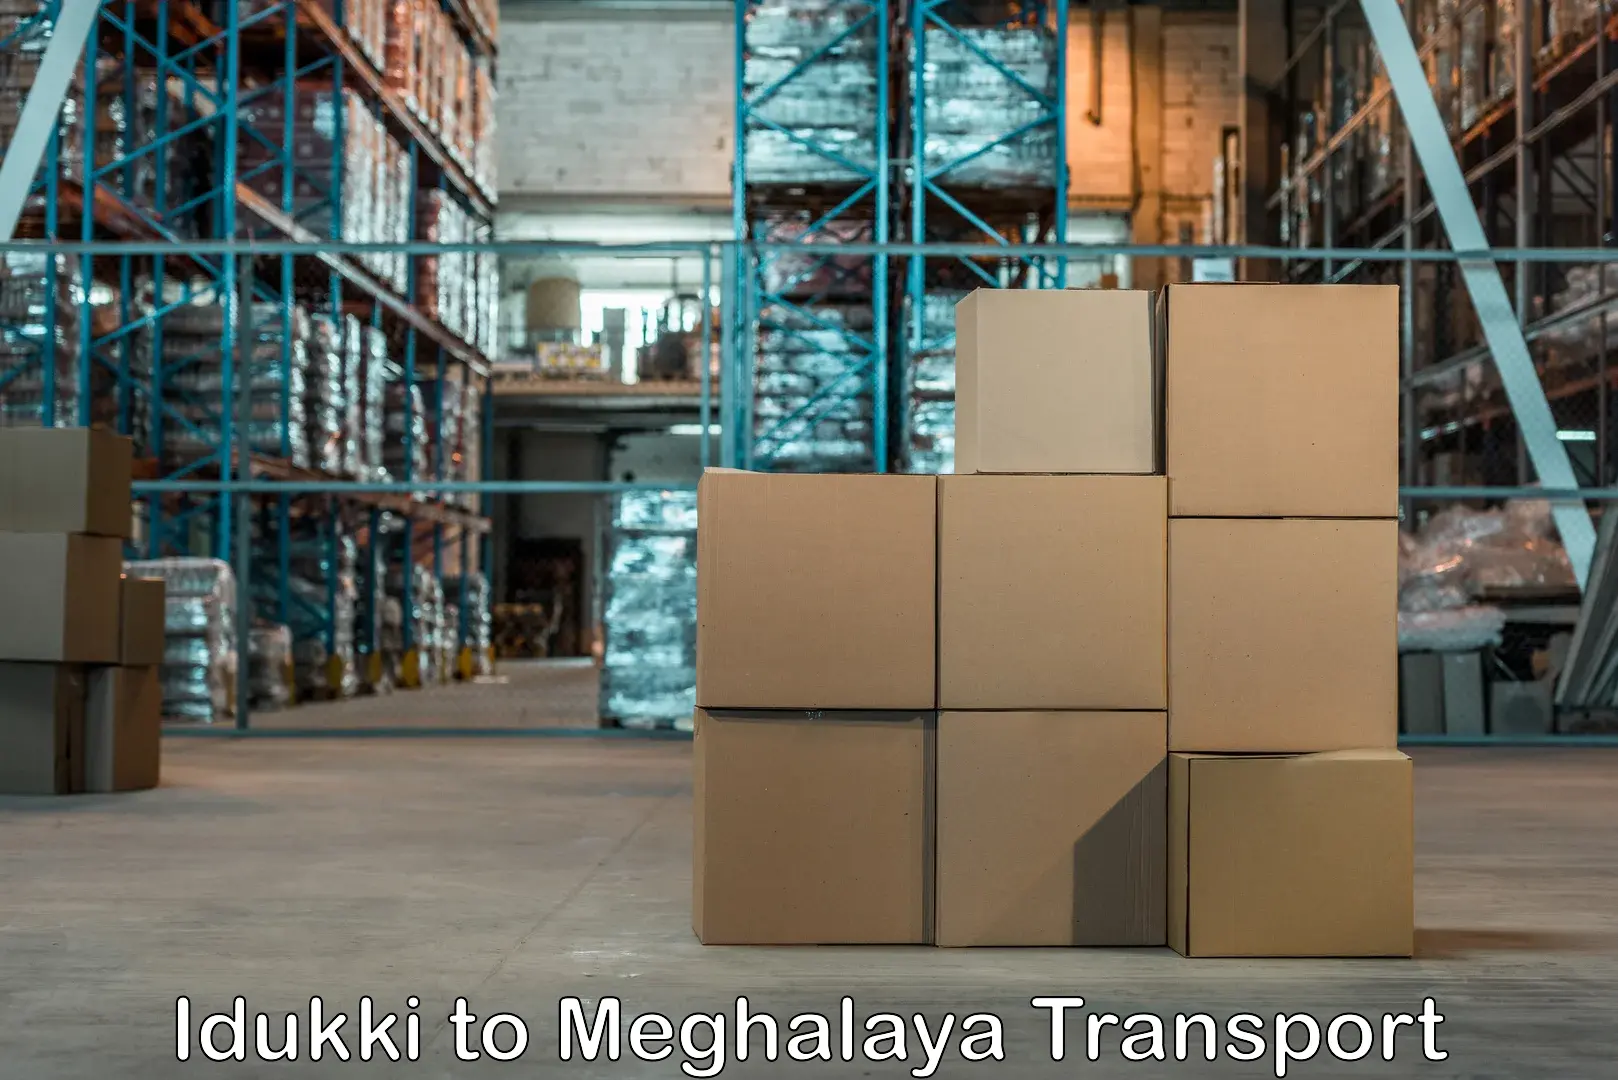 Online transport service Idukki to Meghalaya